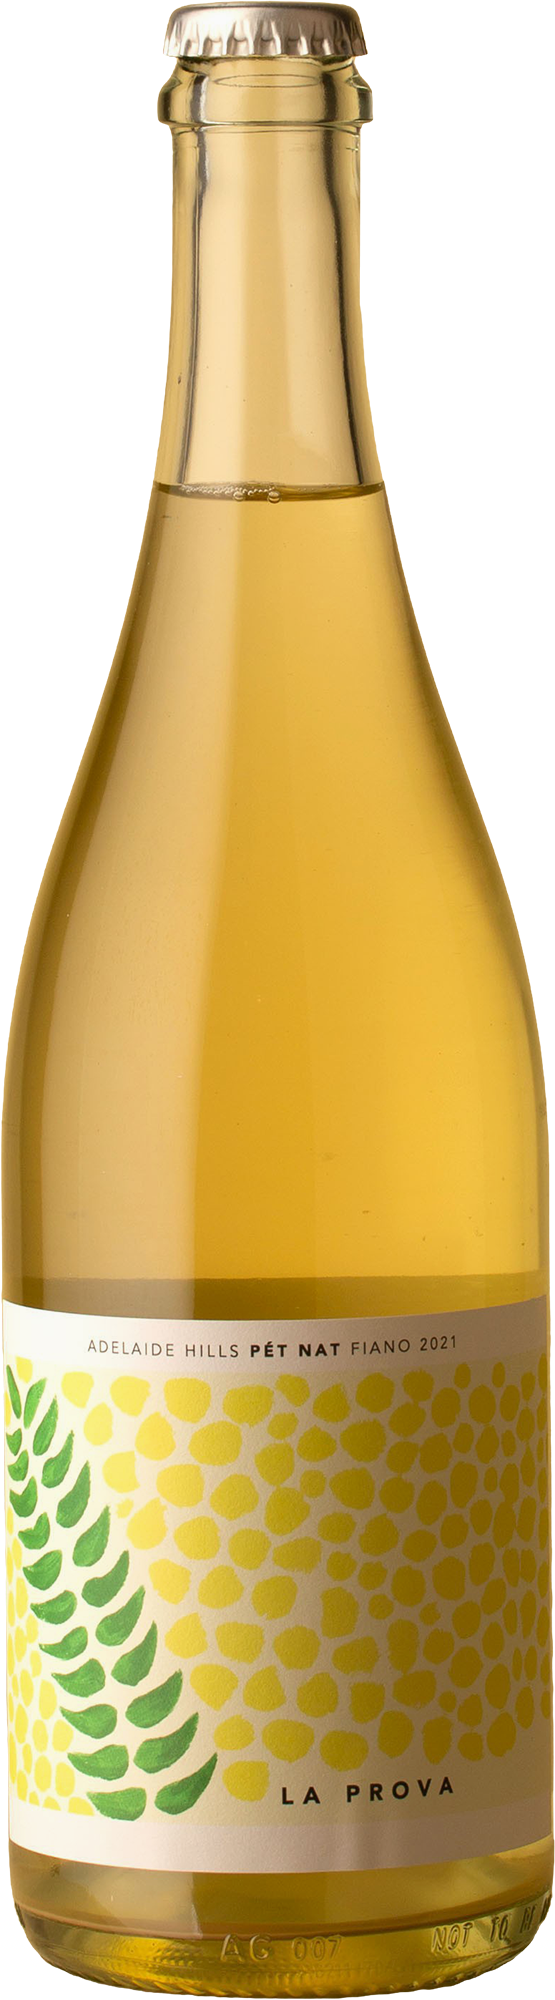 La Prova - Fiano Pet Nat 2021 Sparkling Wine